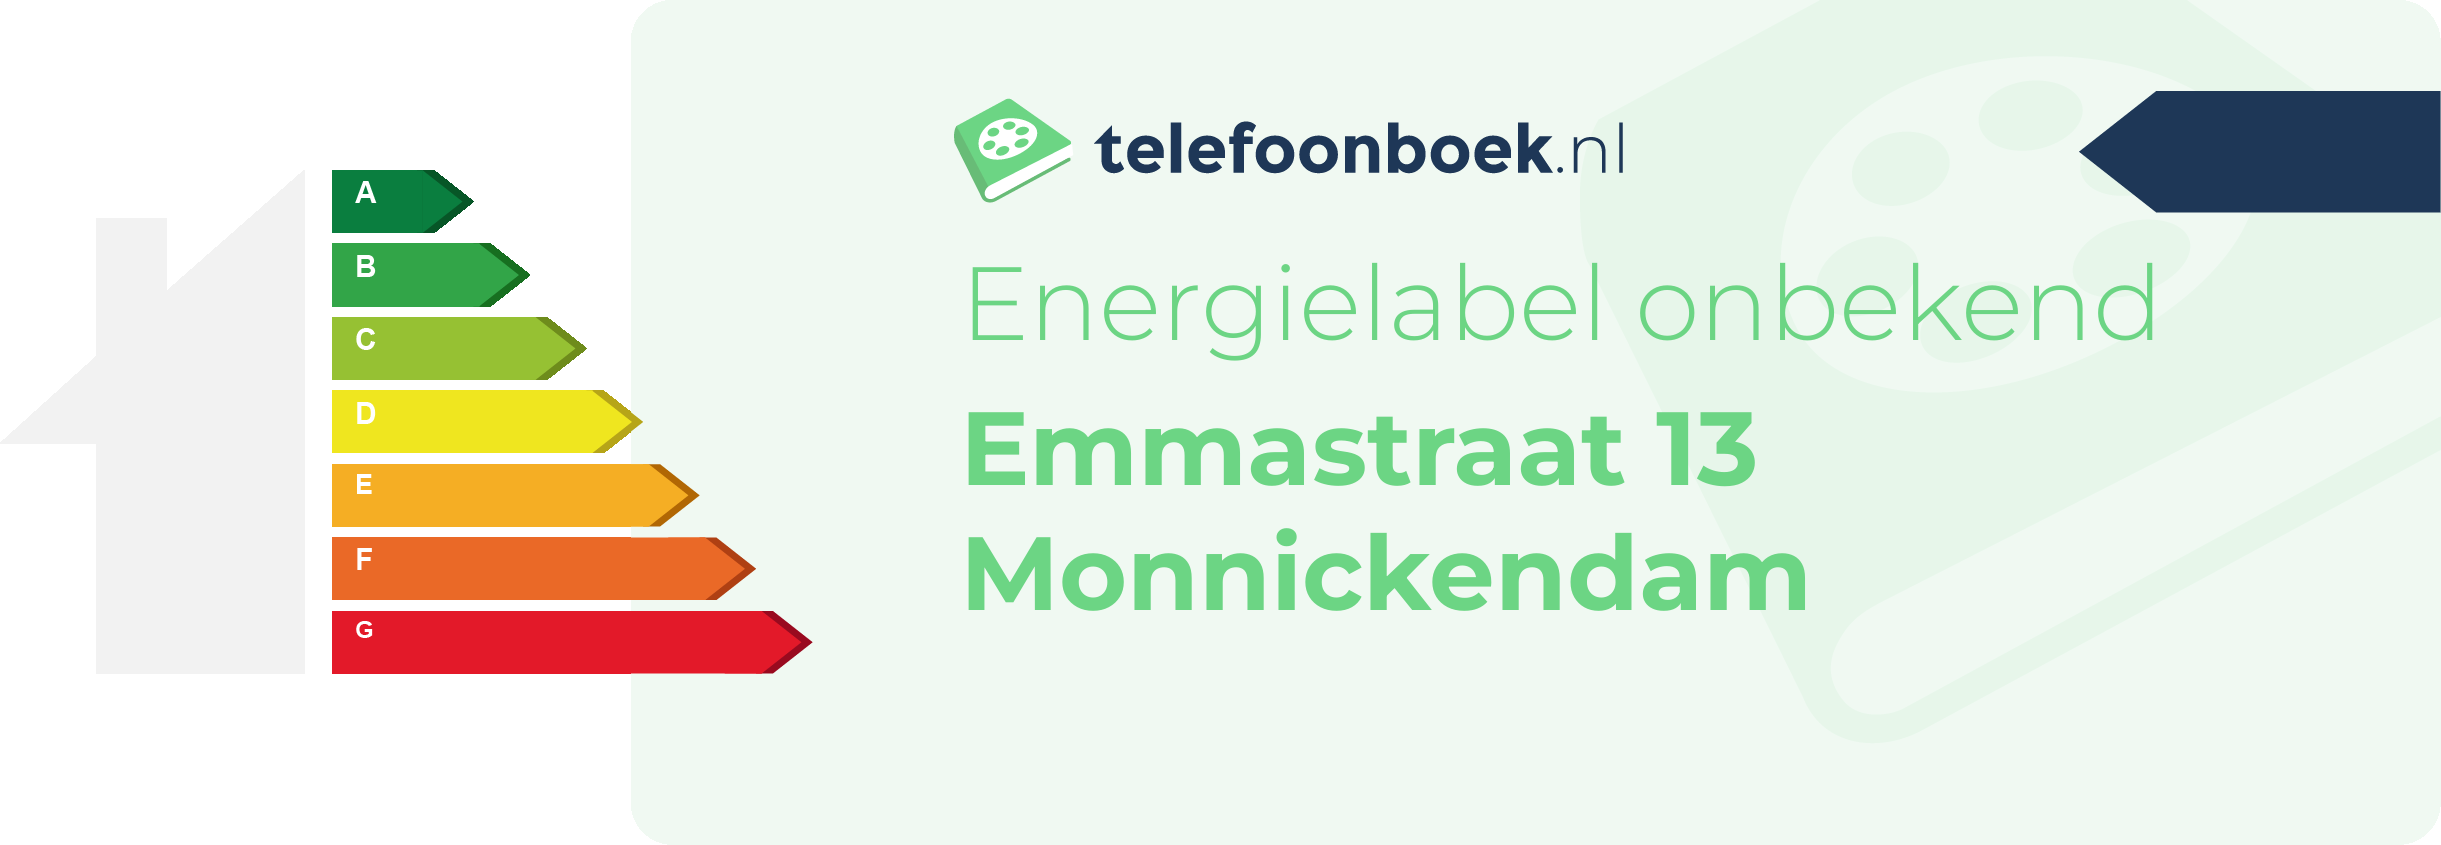 Energielabel Emmastraat 13 Monnickendam